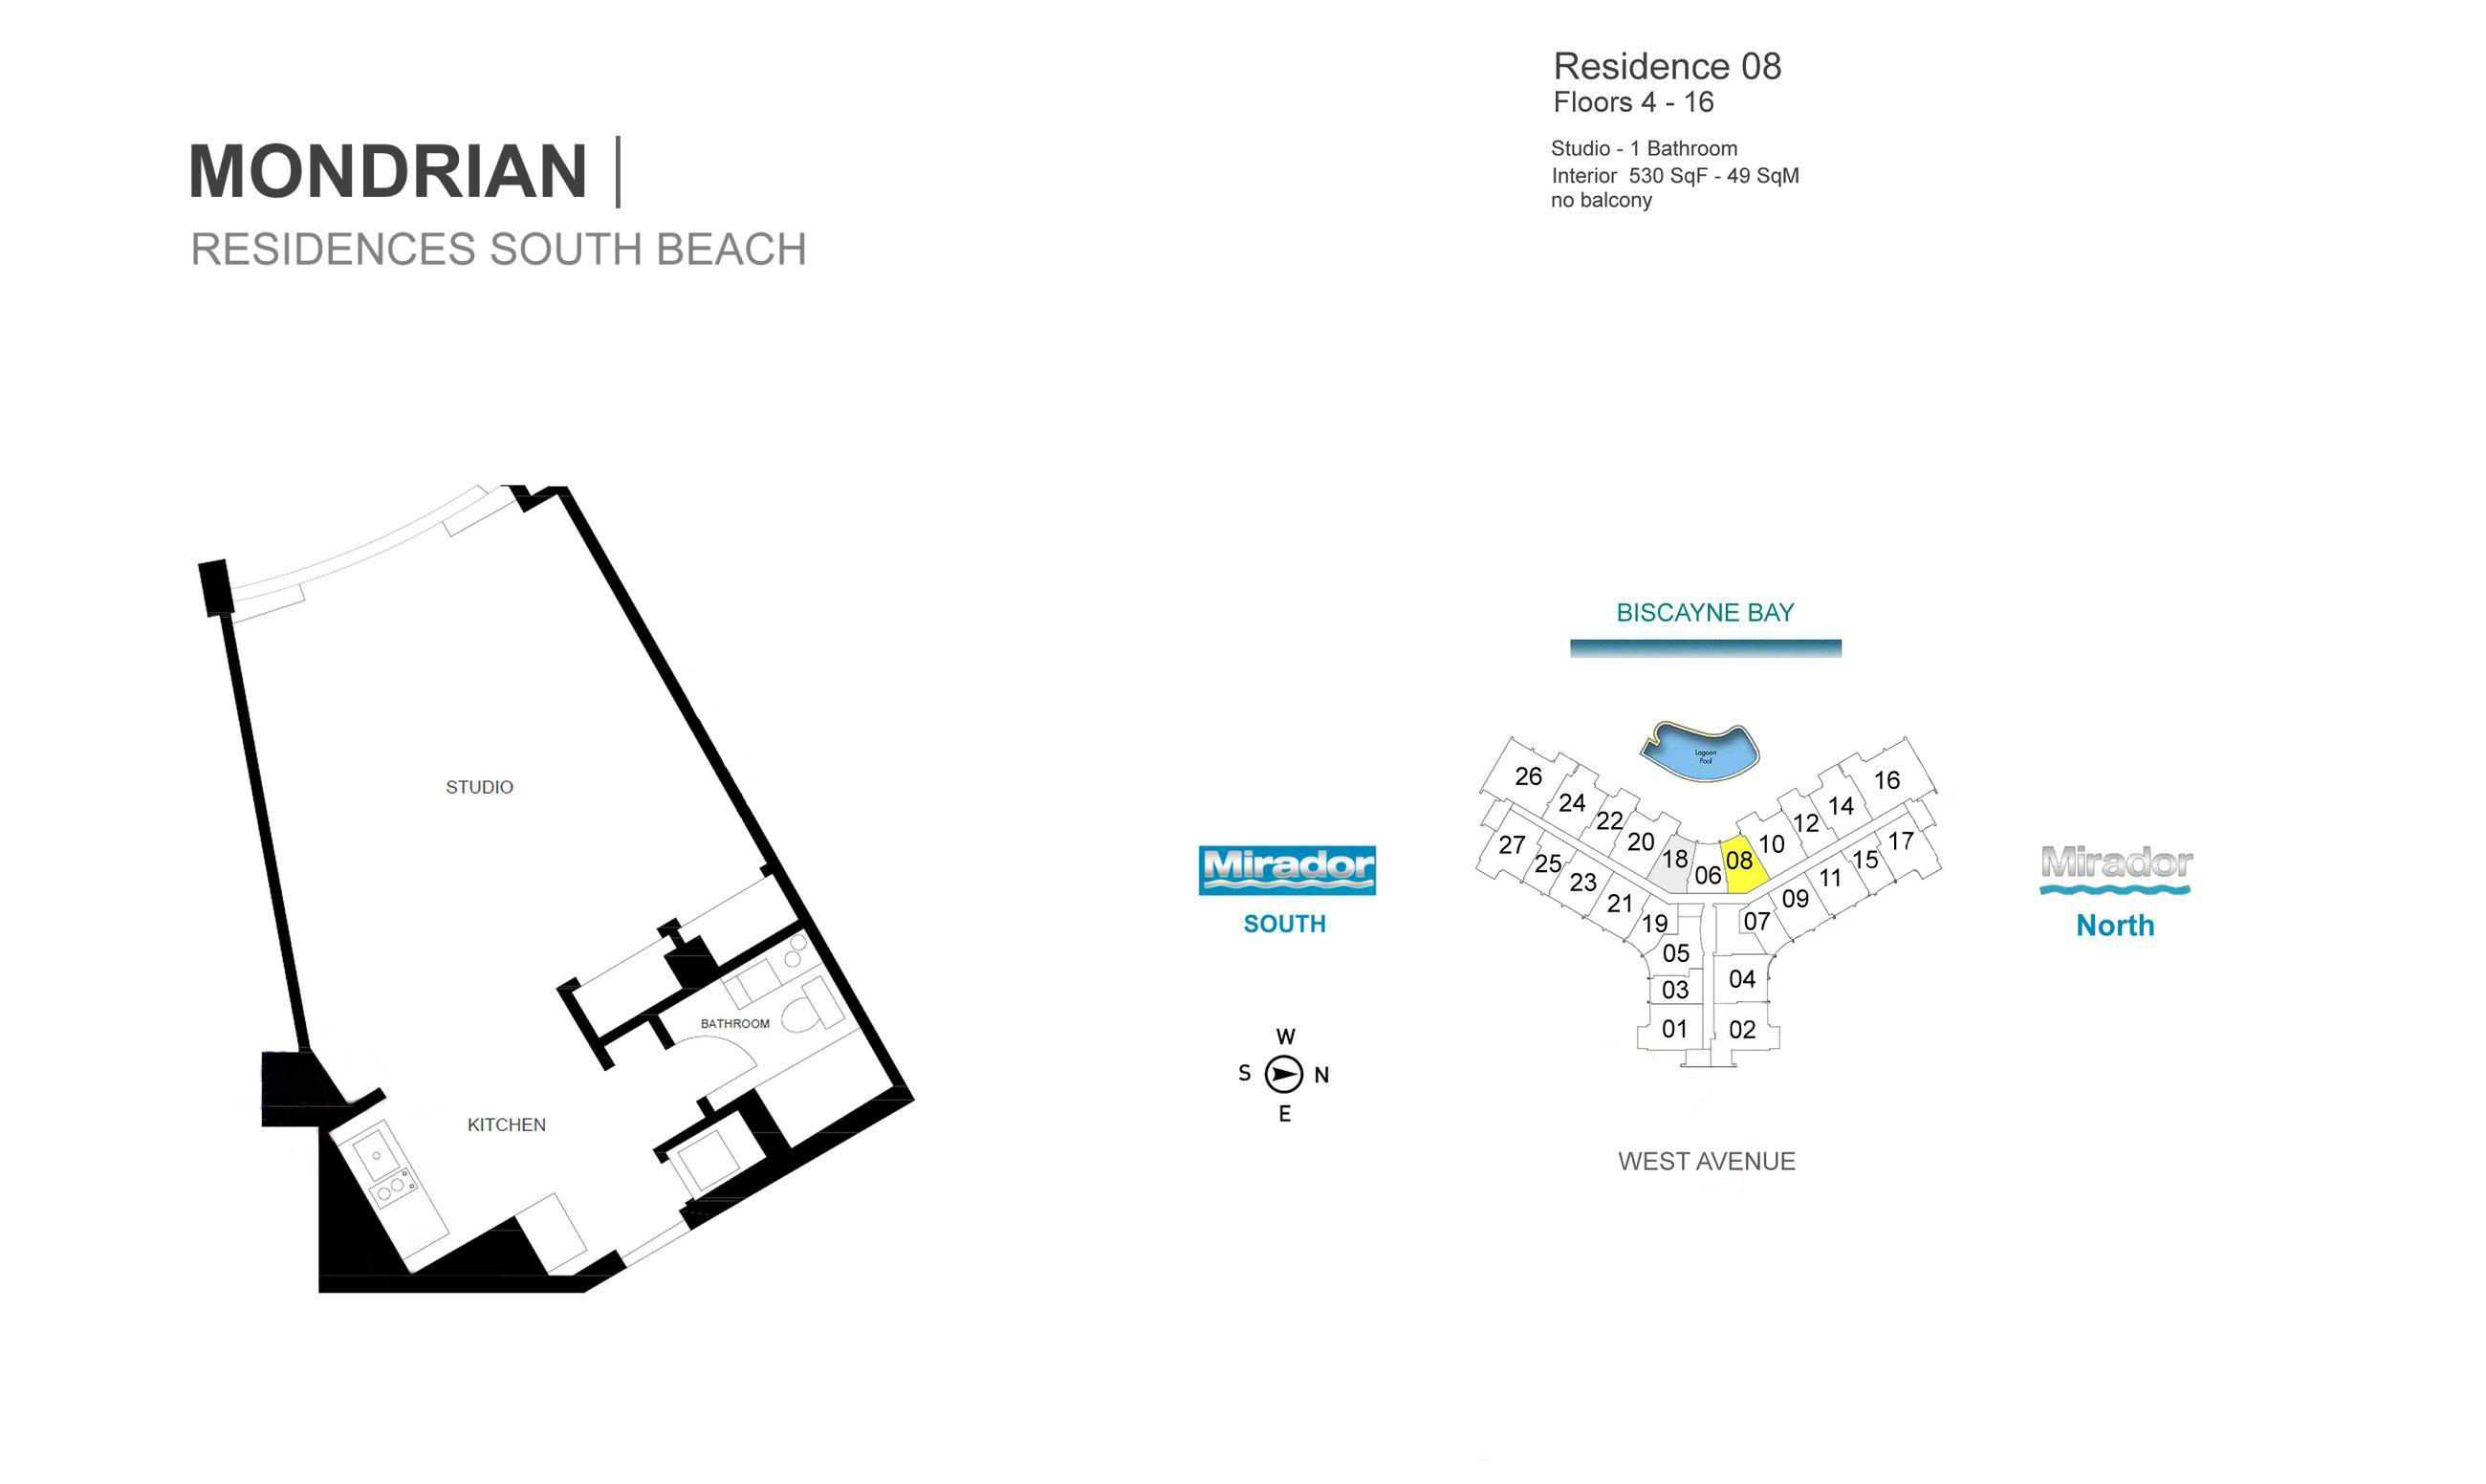 Mondrian South Beach Residence 08